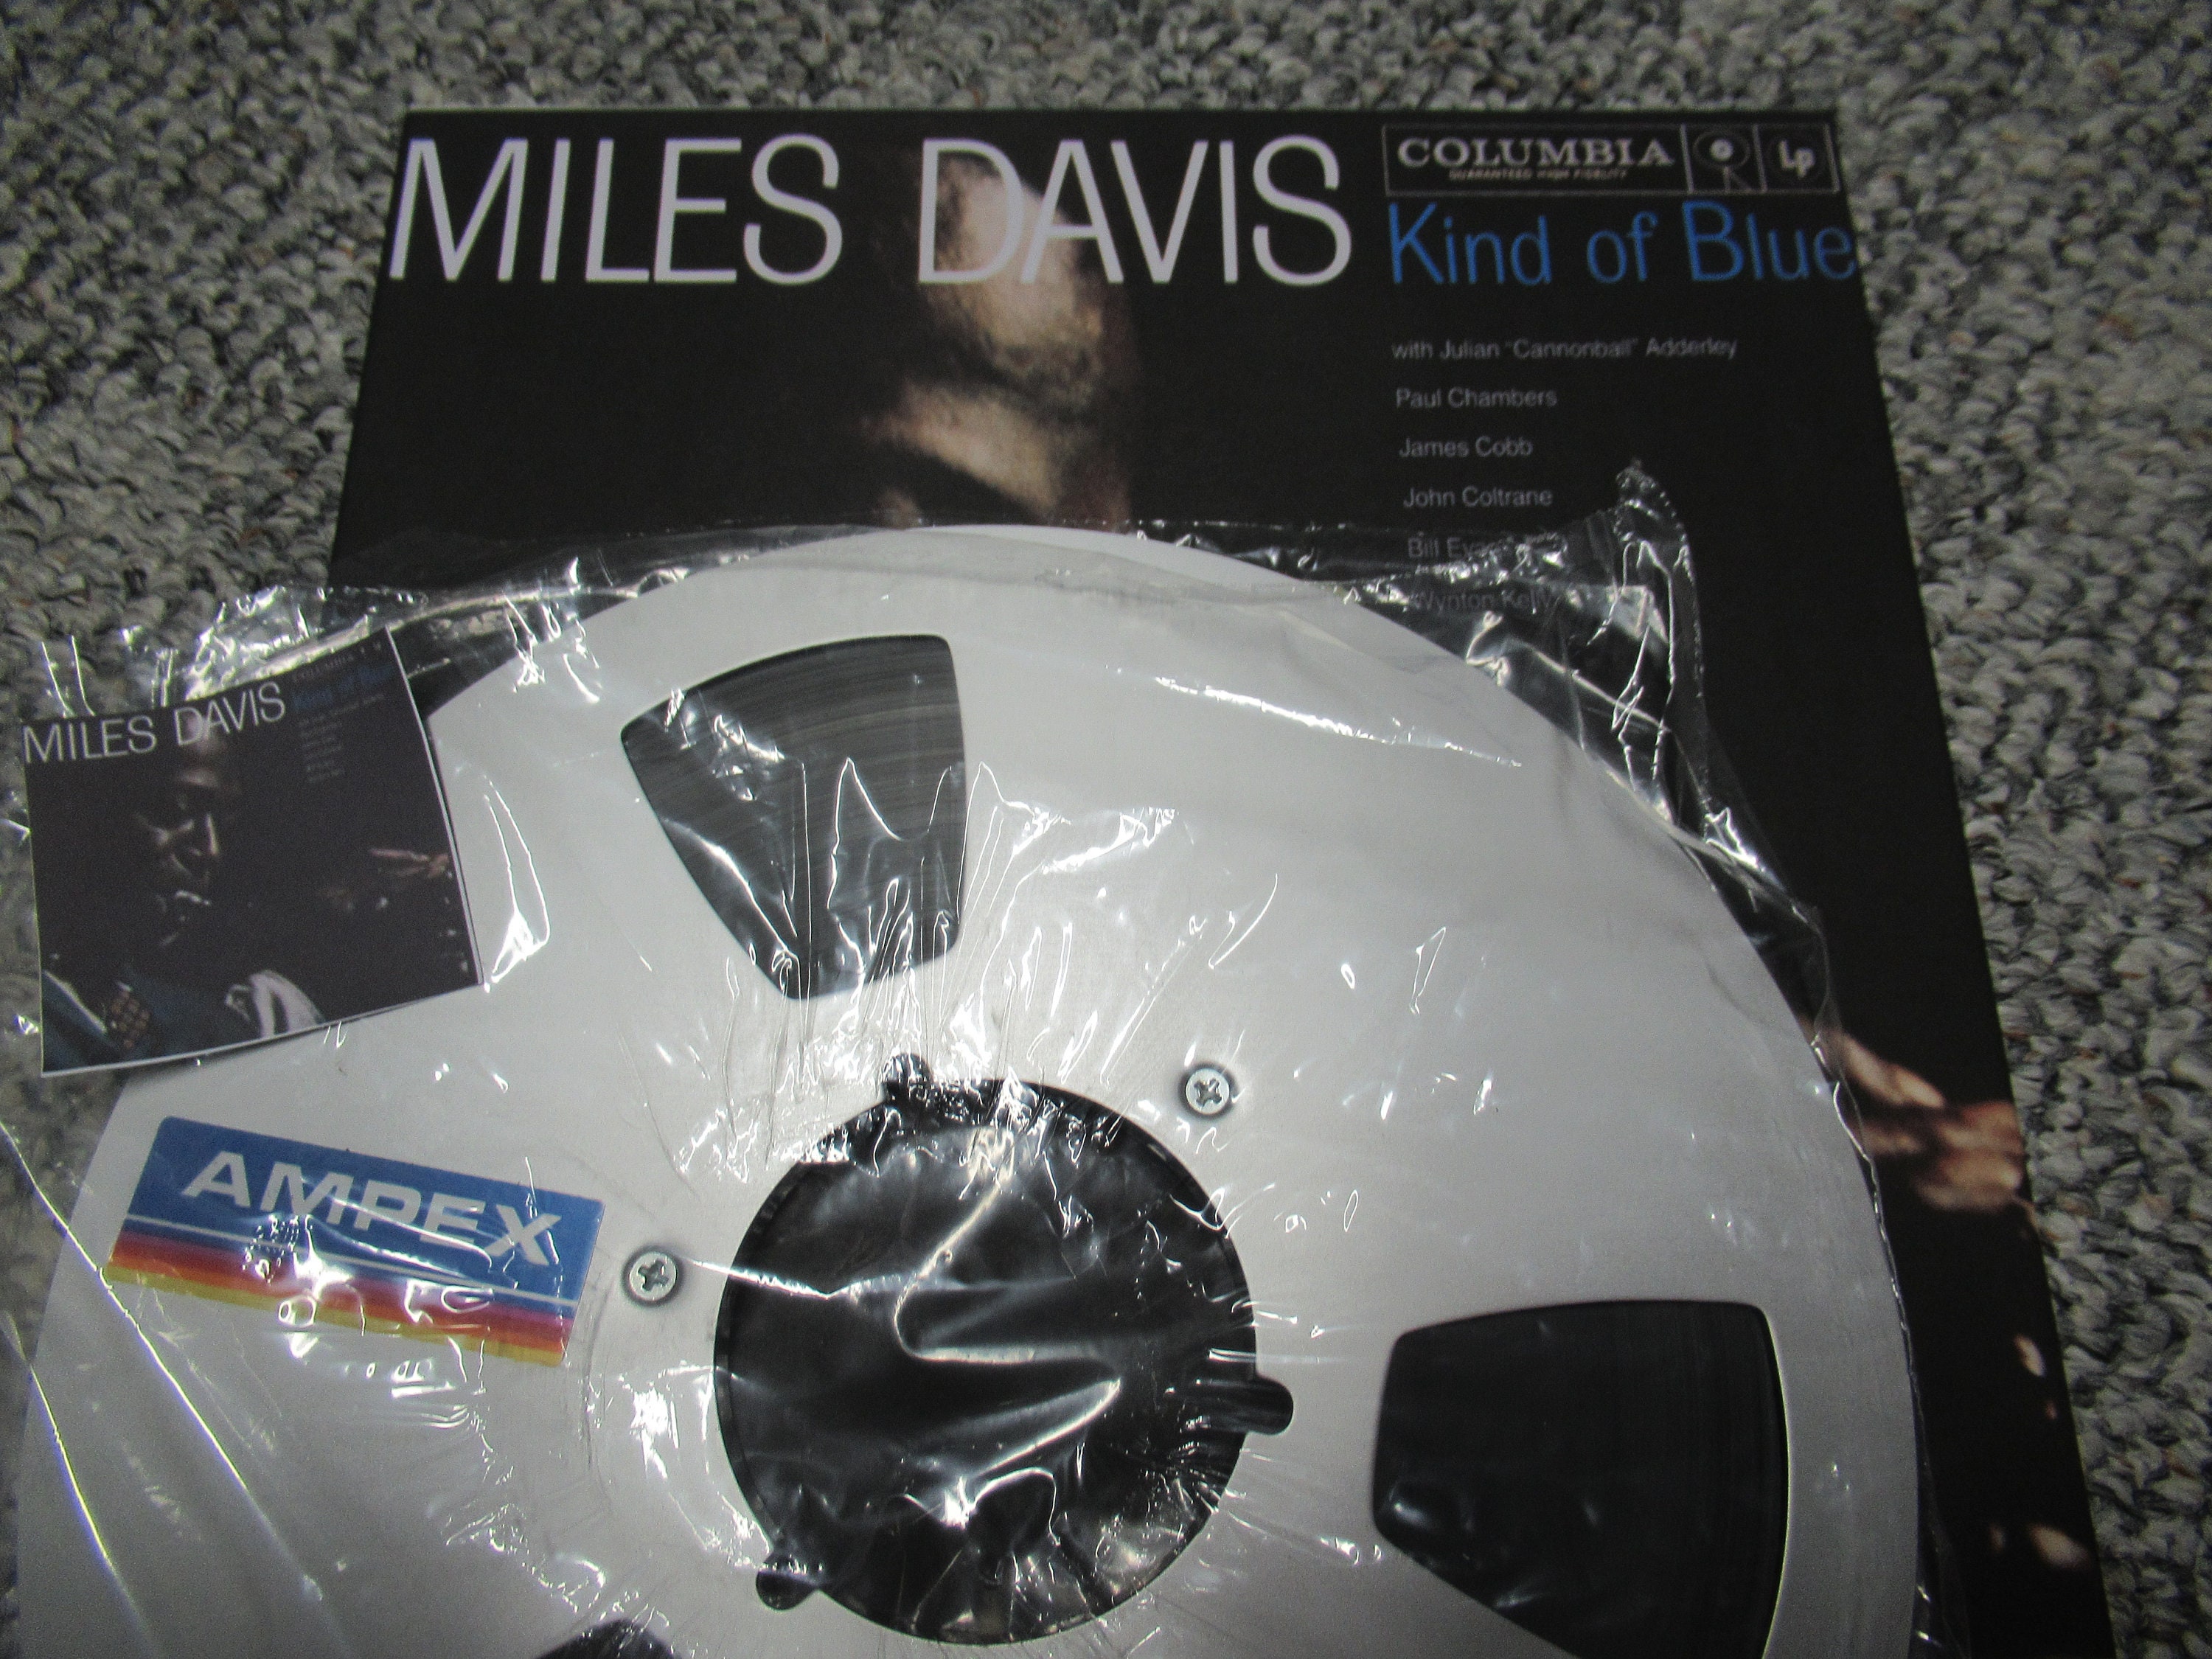 Miles Davis Kind of Blue 2 Track 151/2 IPS Reel to Reel Tape 